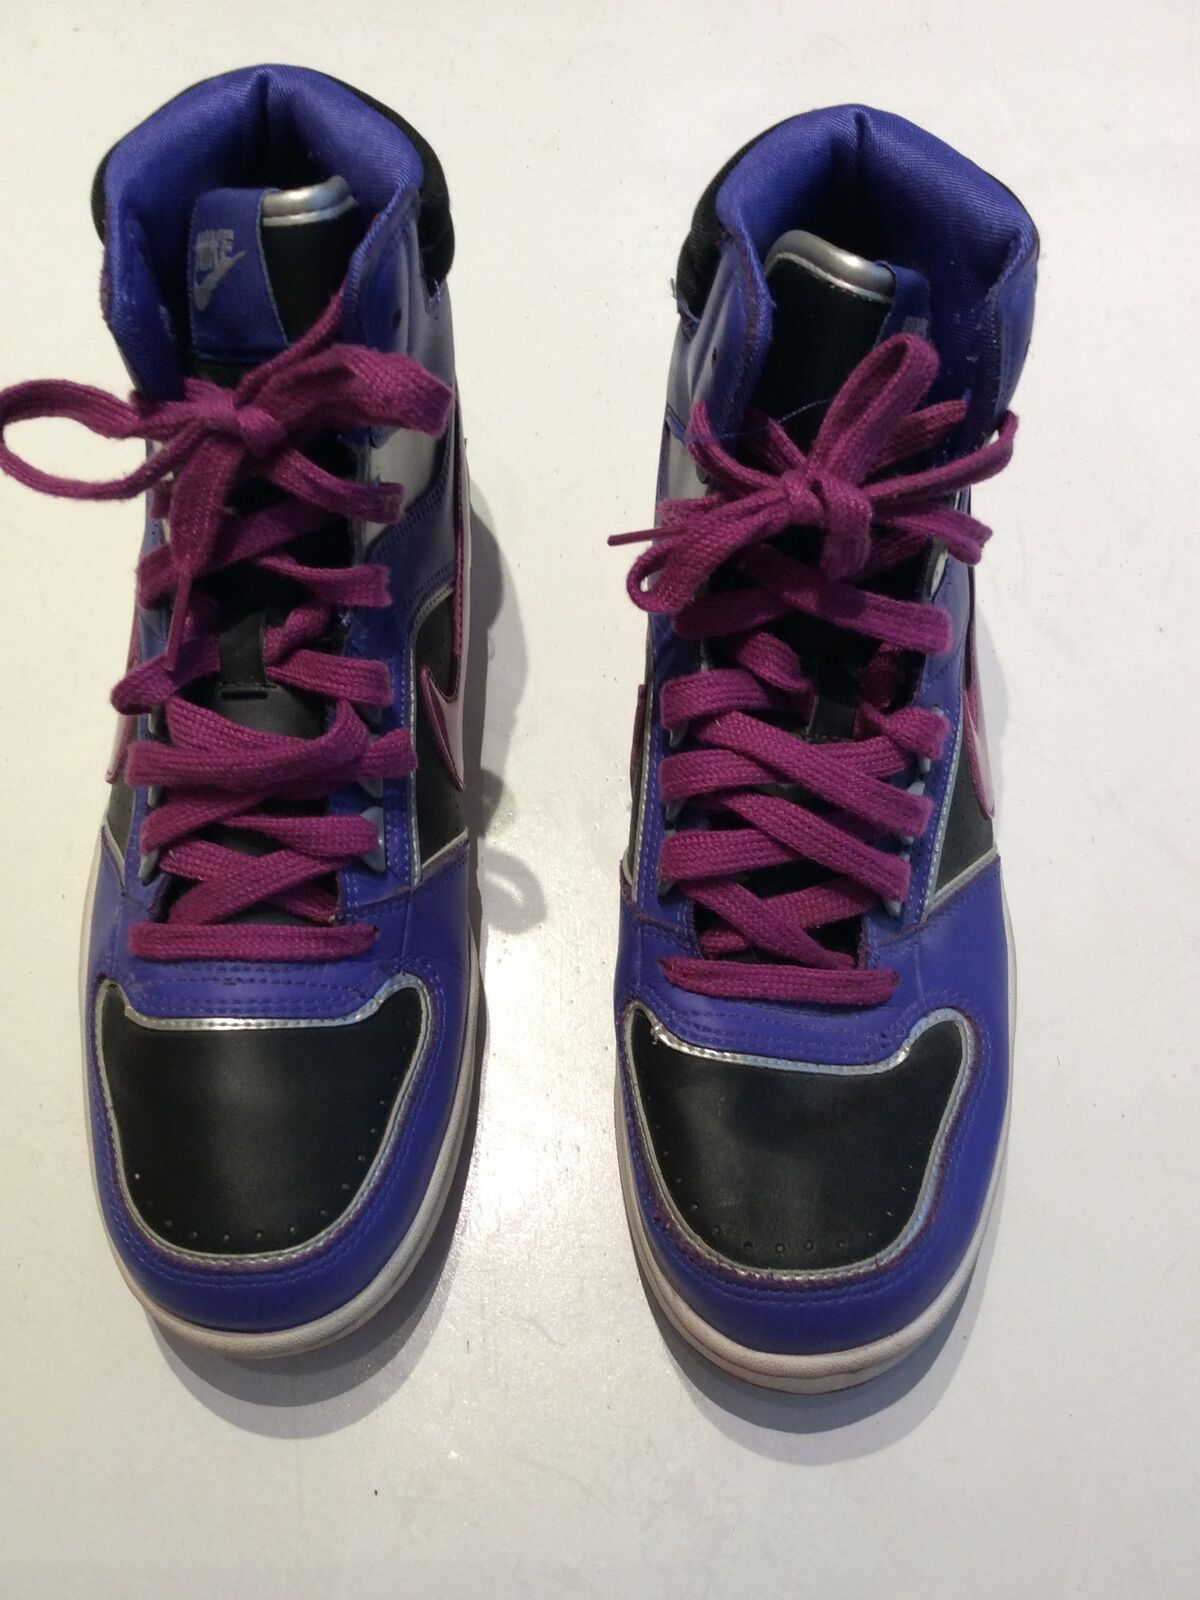 Nike Women’s Purple Black Metallic High Tops Sneakers Basketball Shoes Size 9.5